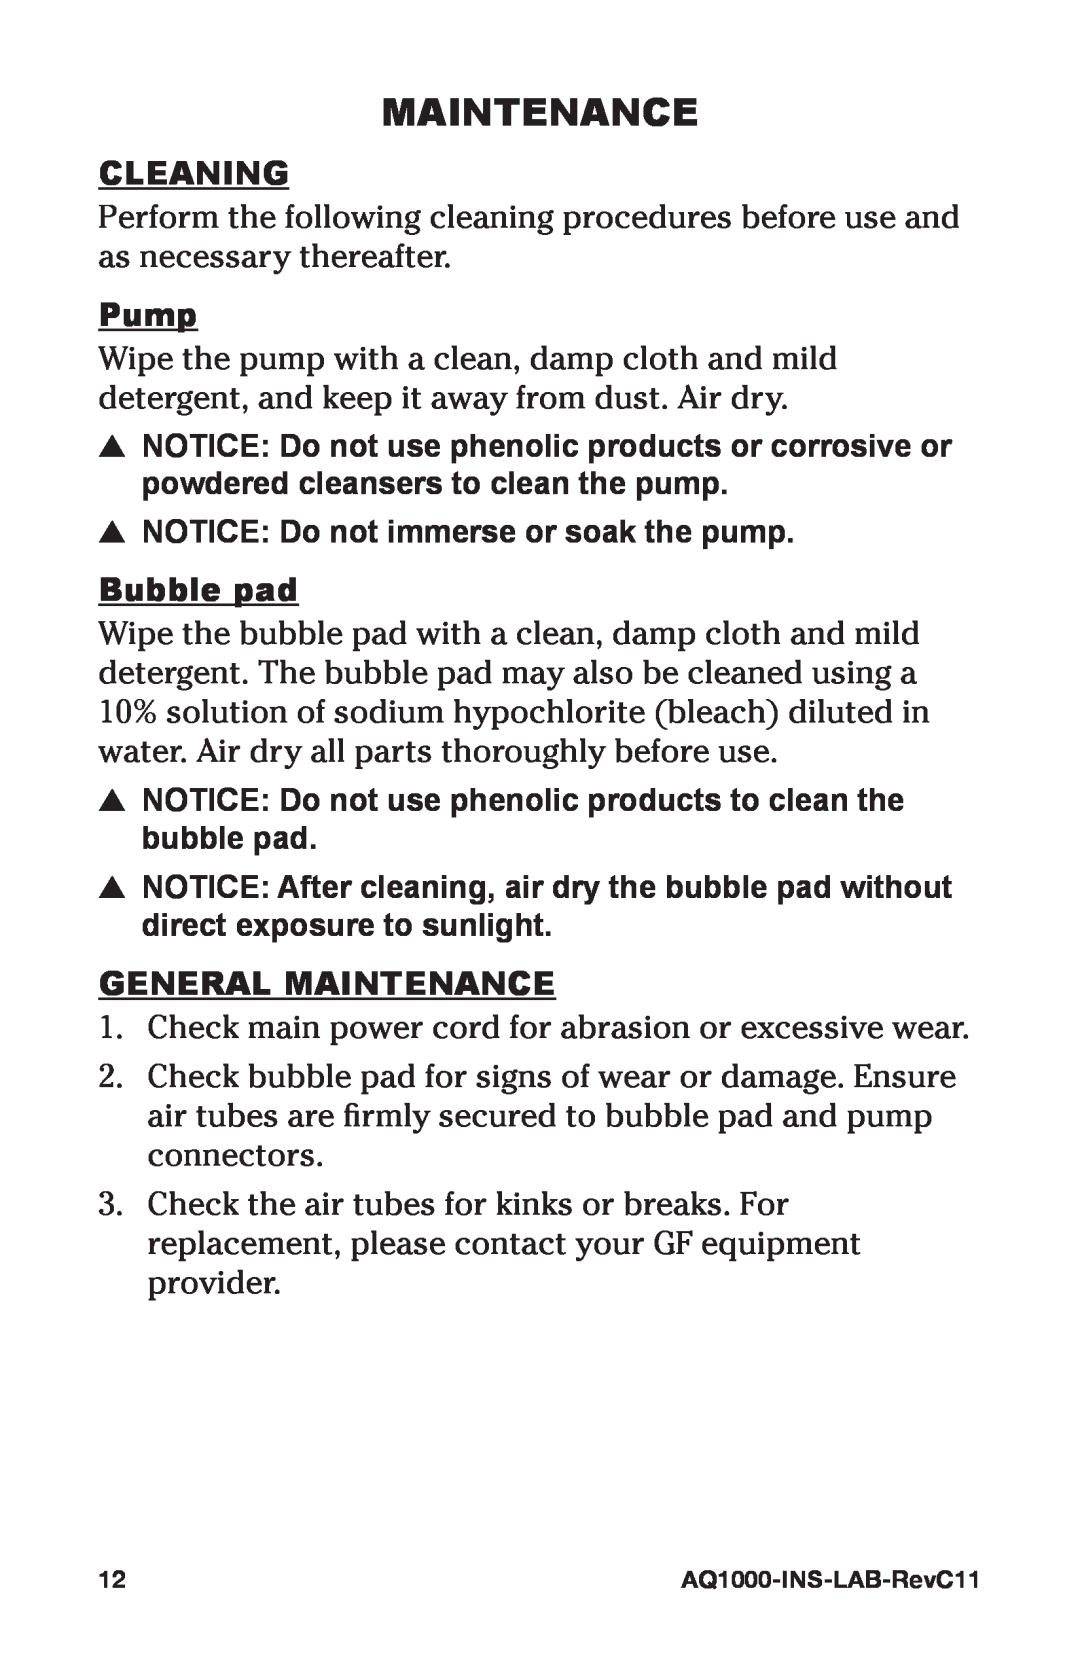 Graham Field AQ1000/AQ2000 user manual Cleaning, Pump, Bubble pad, General Maintenance 